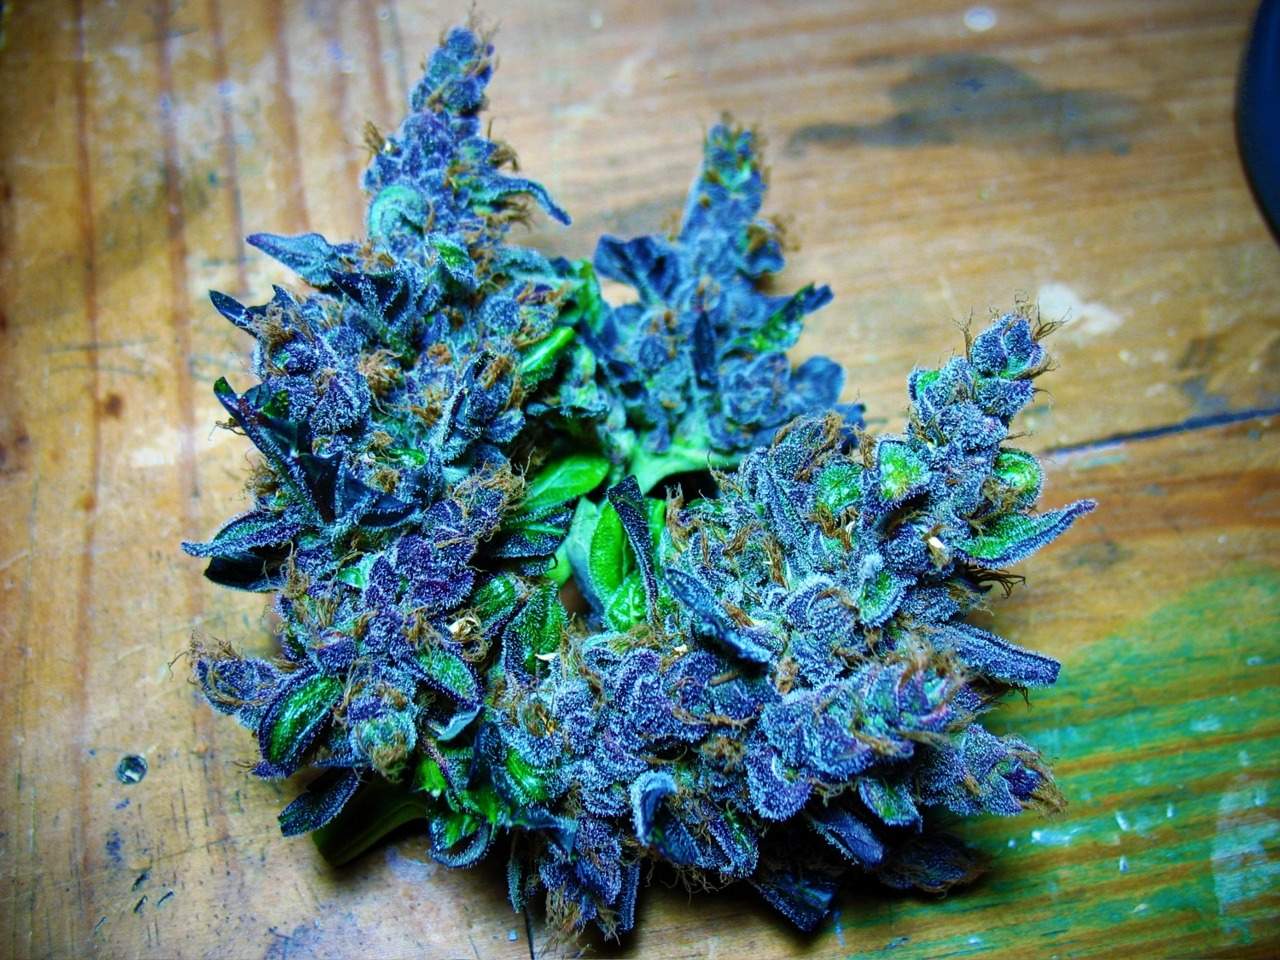 Blue Cannabis Strain. from fancy.com (I use tineye.com to reverse image sea...